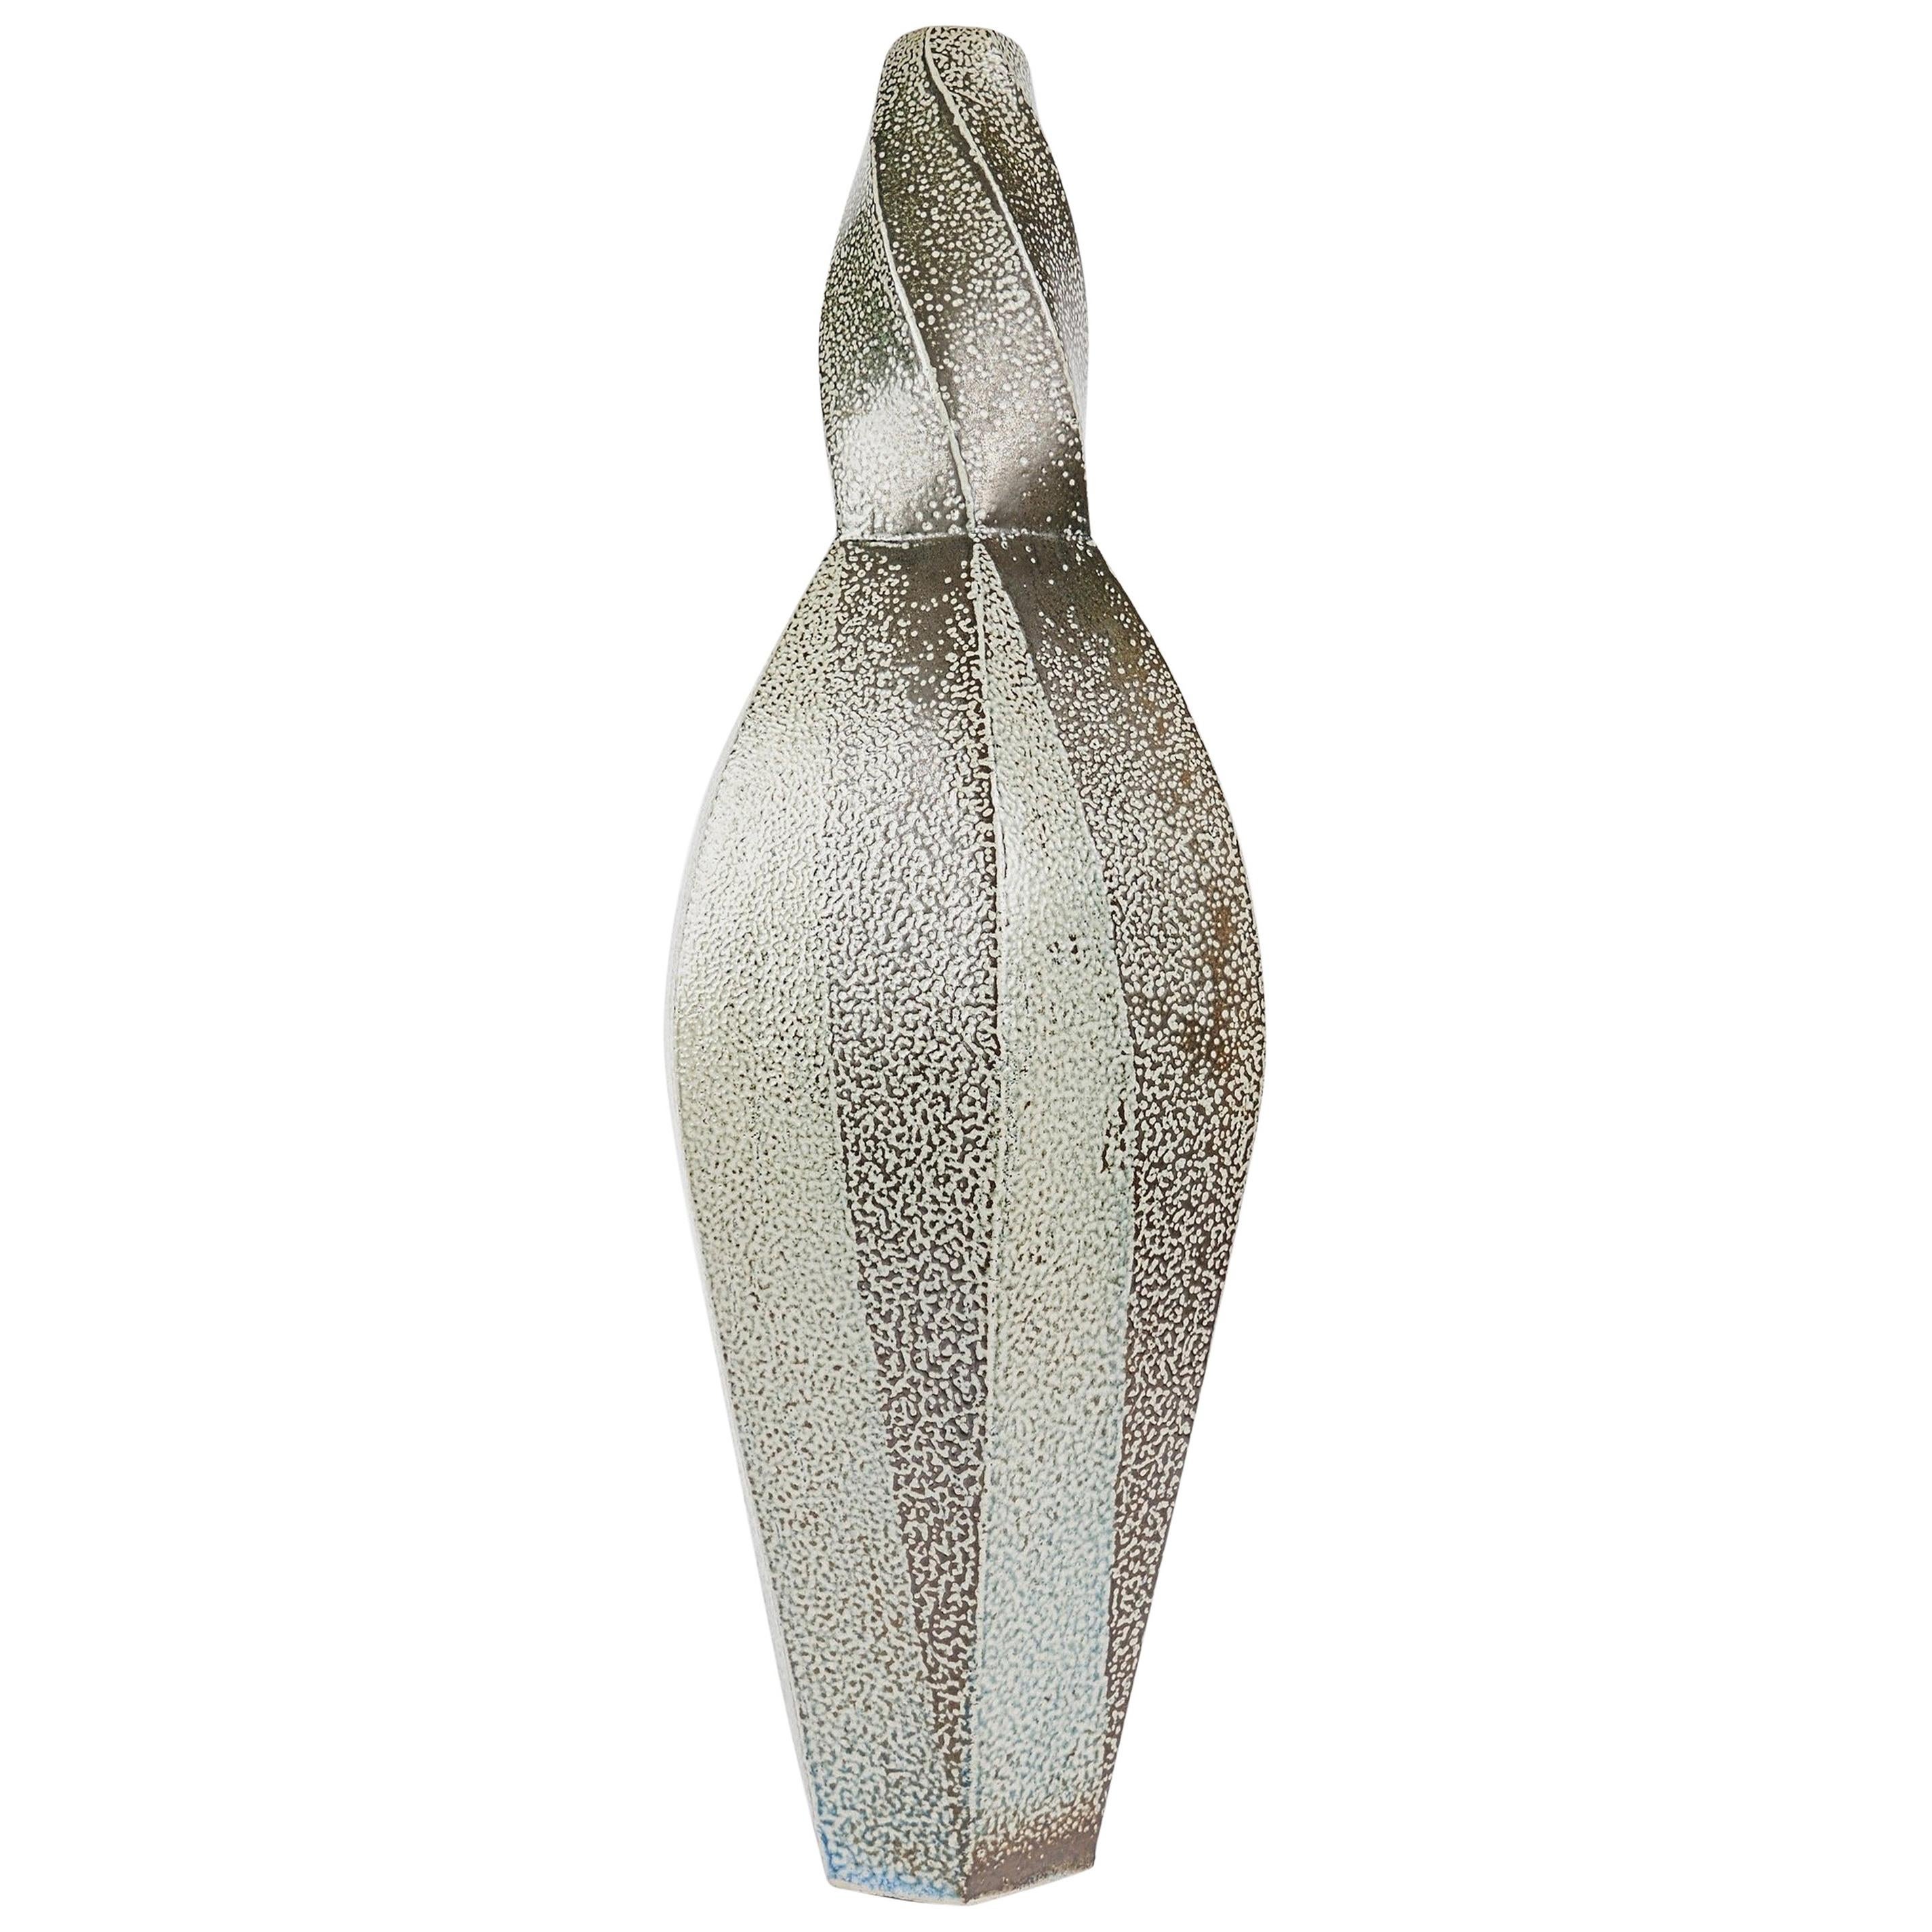 Vase en céramique torsadée Aage Birck, Danemark, 2012